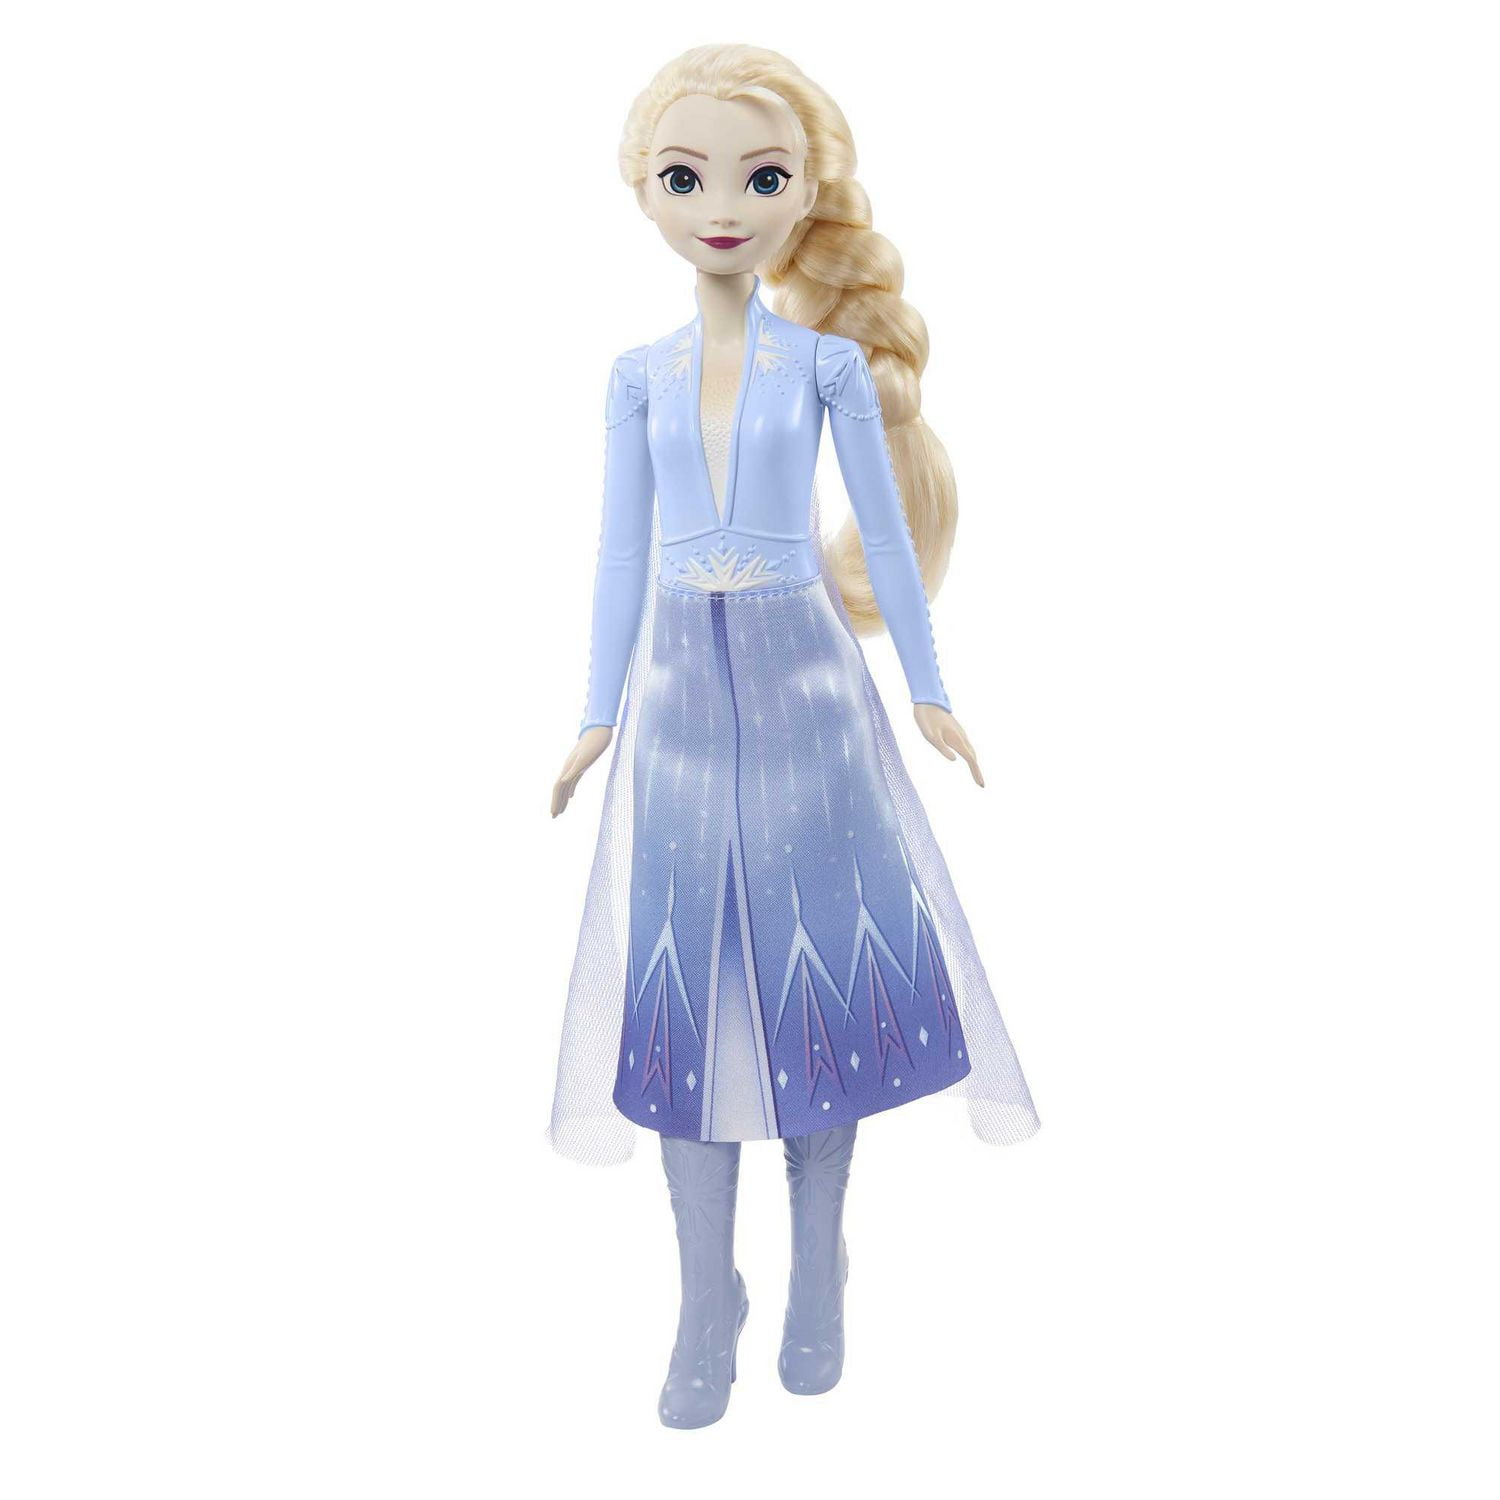 Disney Frozen Elsa Fashion Hair Play Doll New with Box 